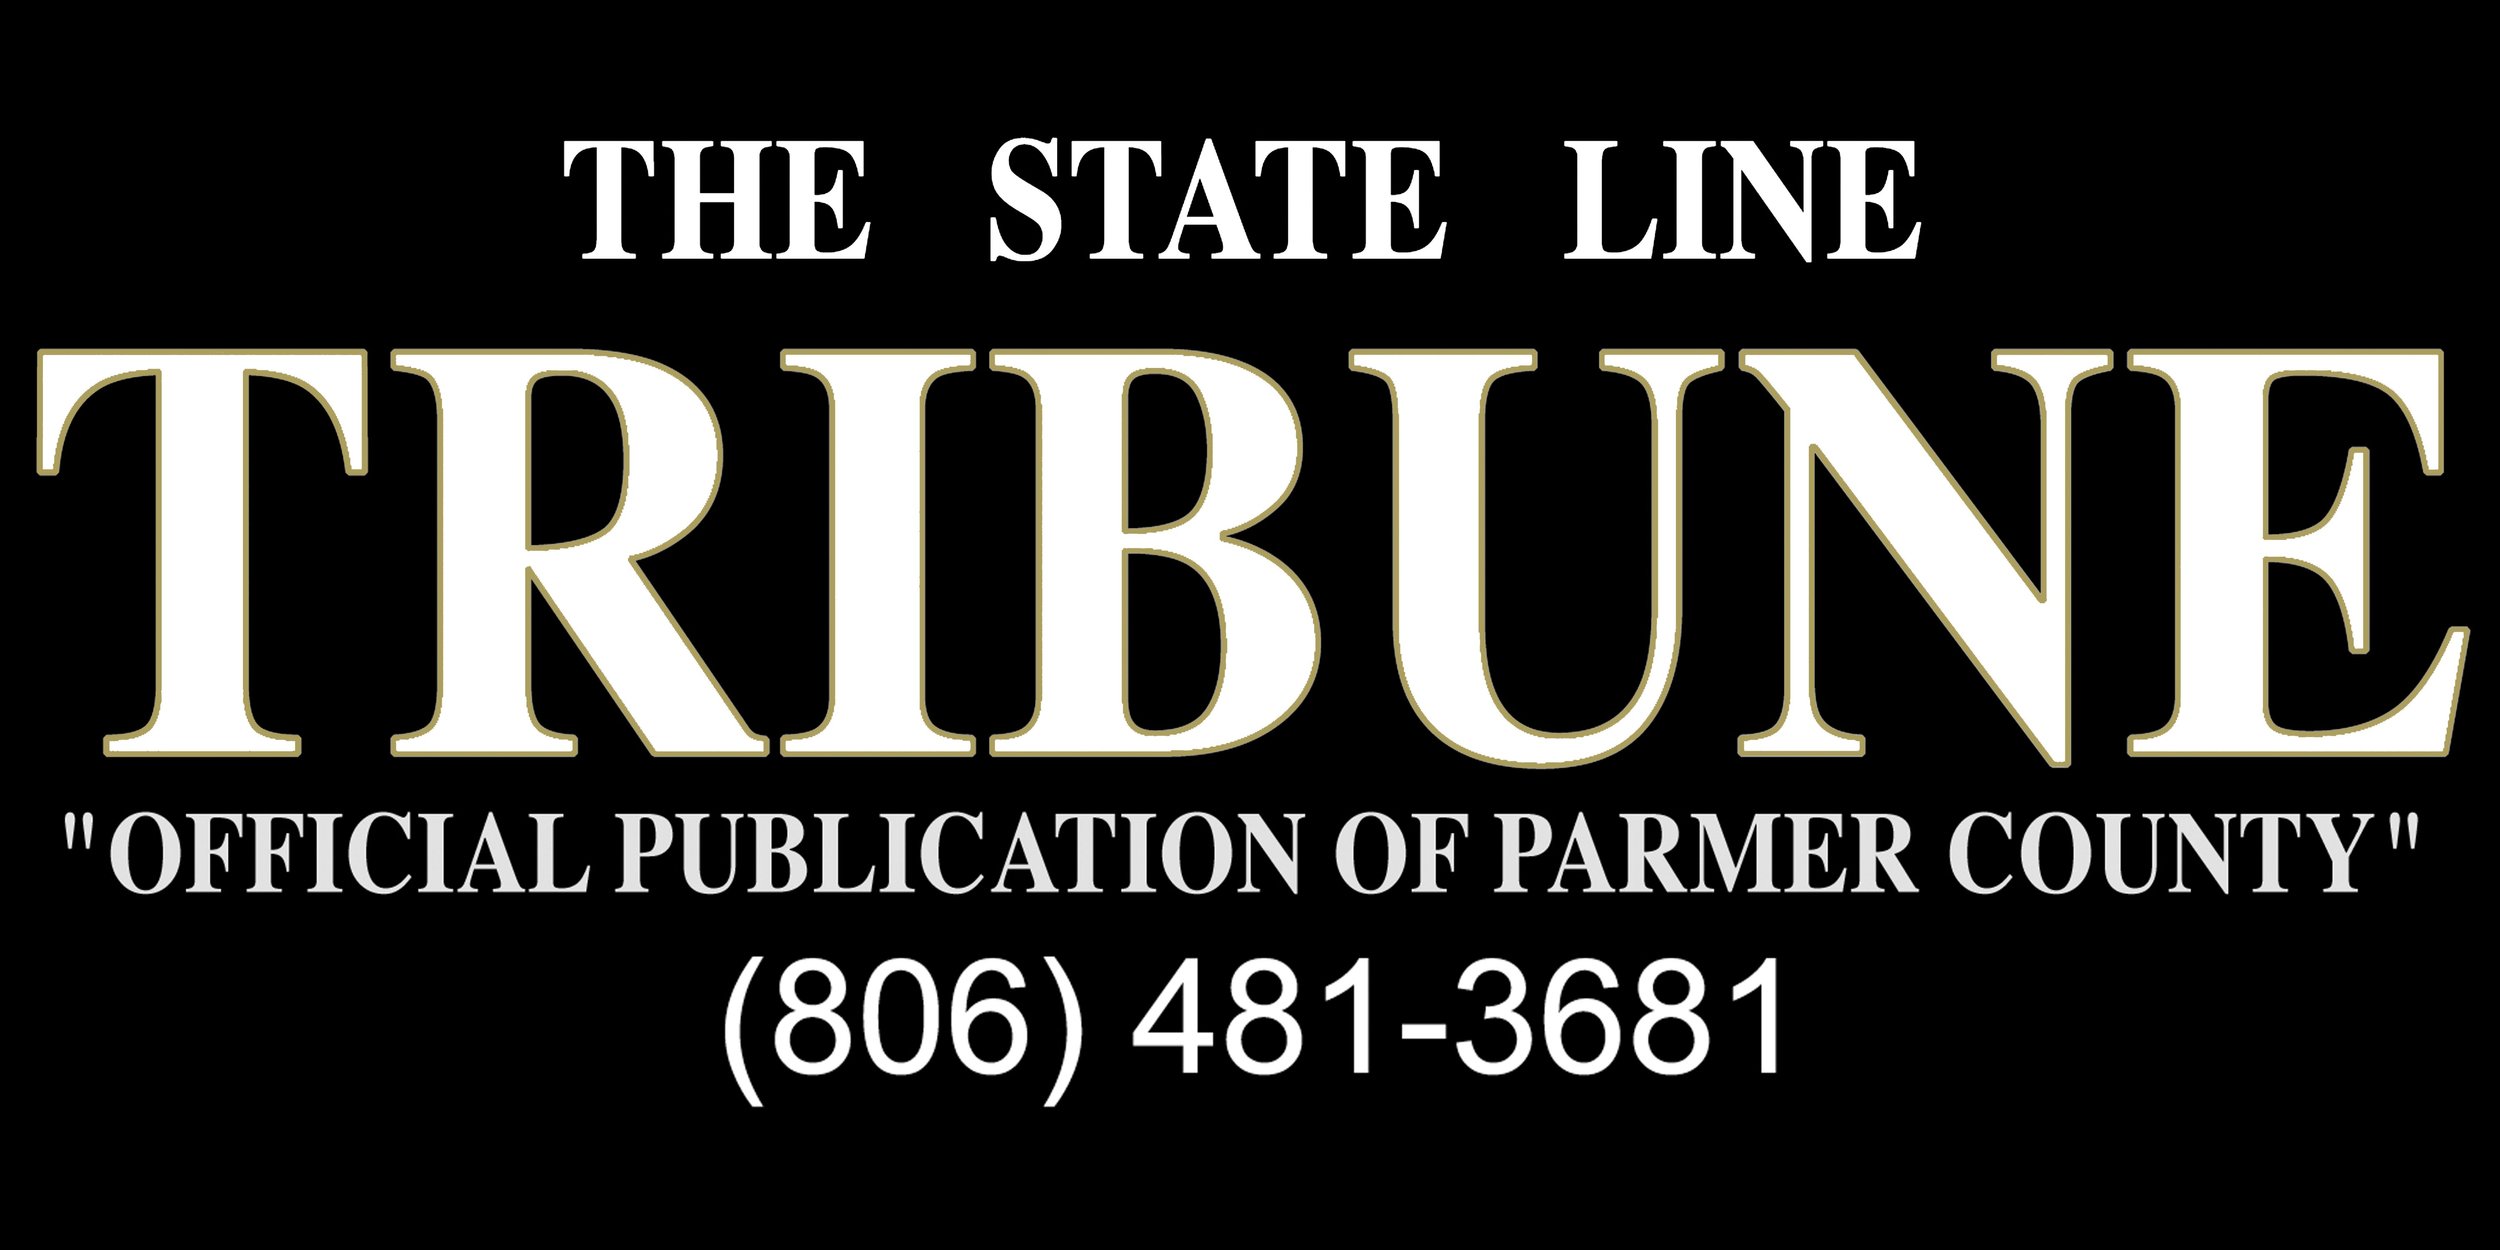 State Line Tribune logo.jpg